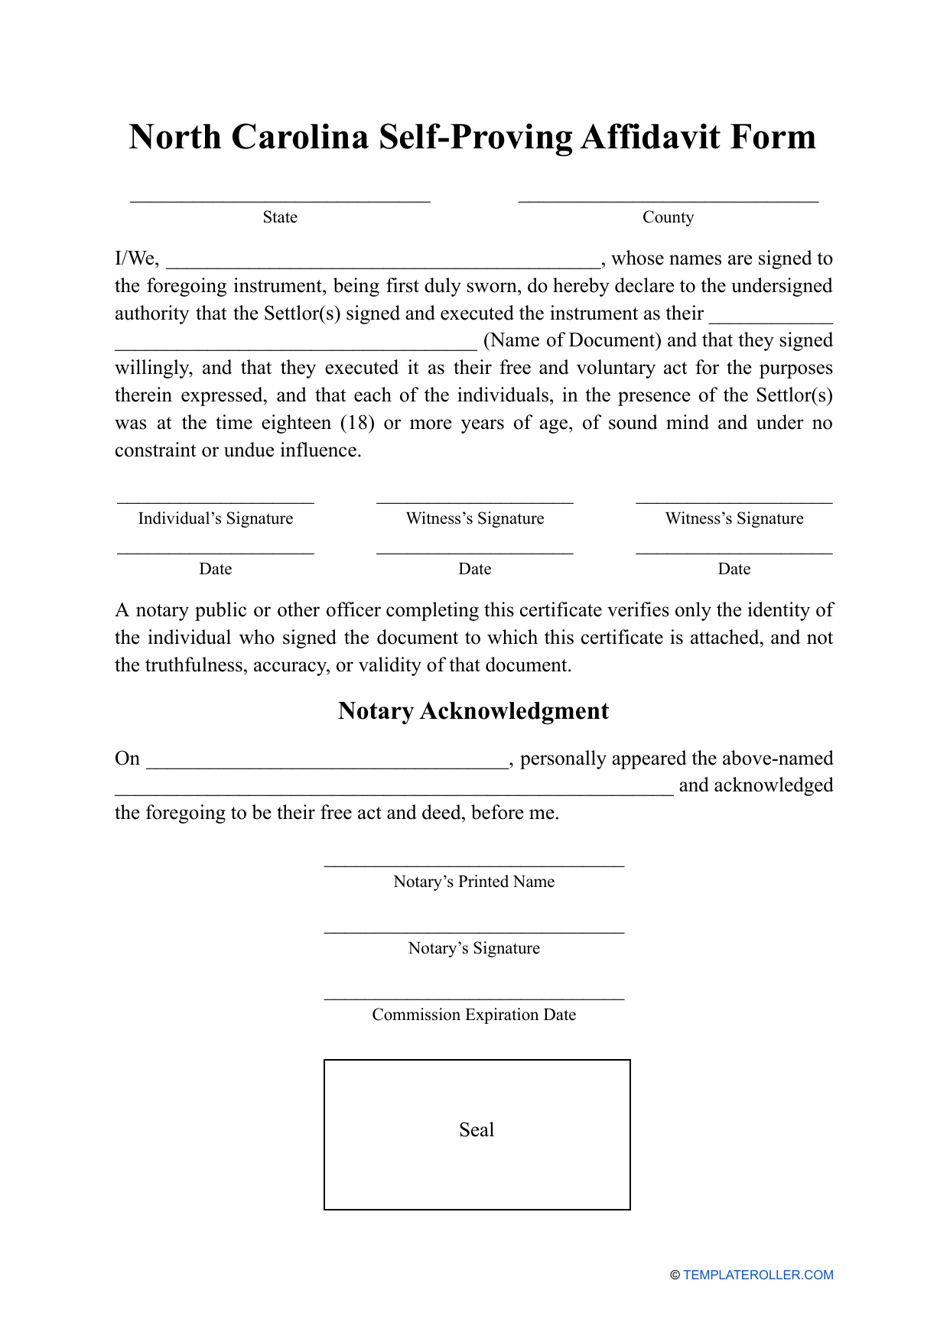 Self-proving Affidavit Form - North Carolina, Page 1